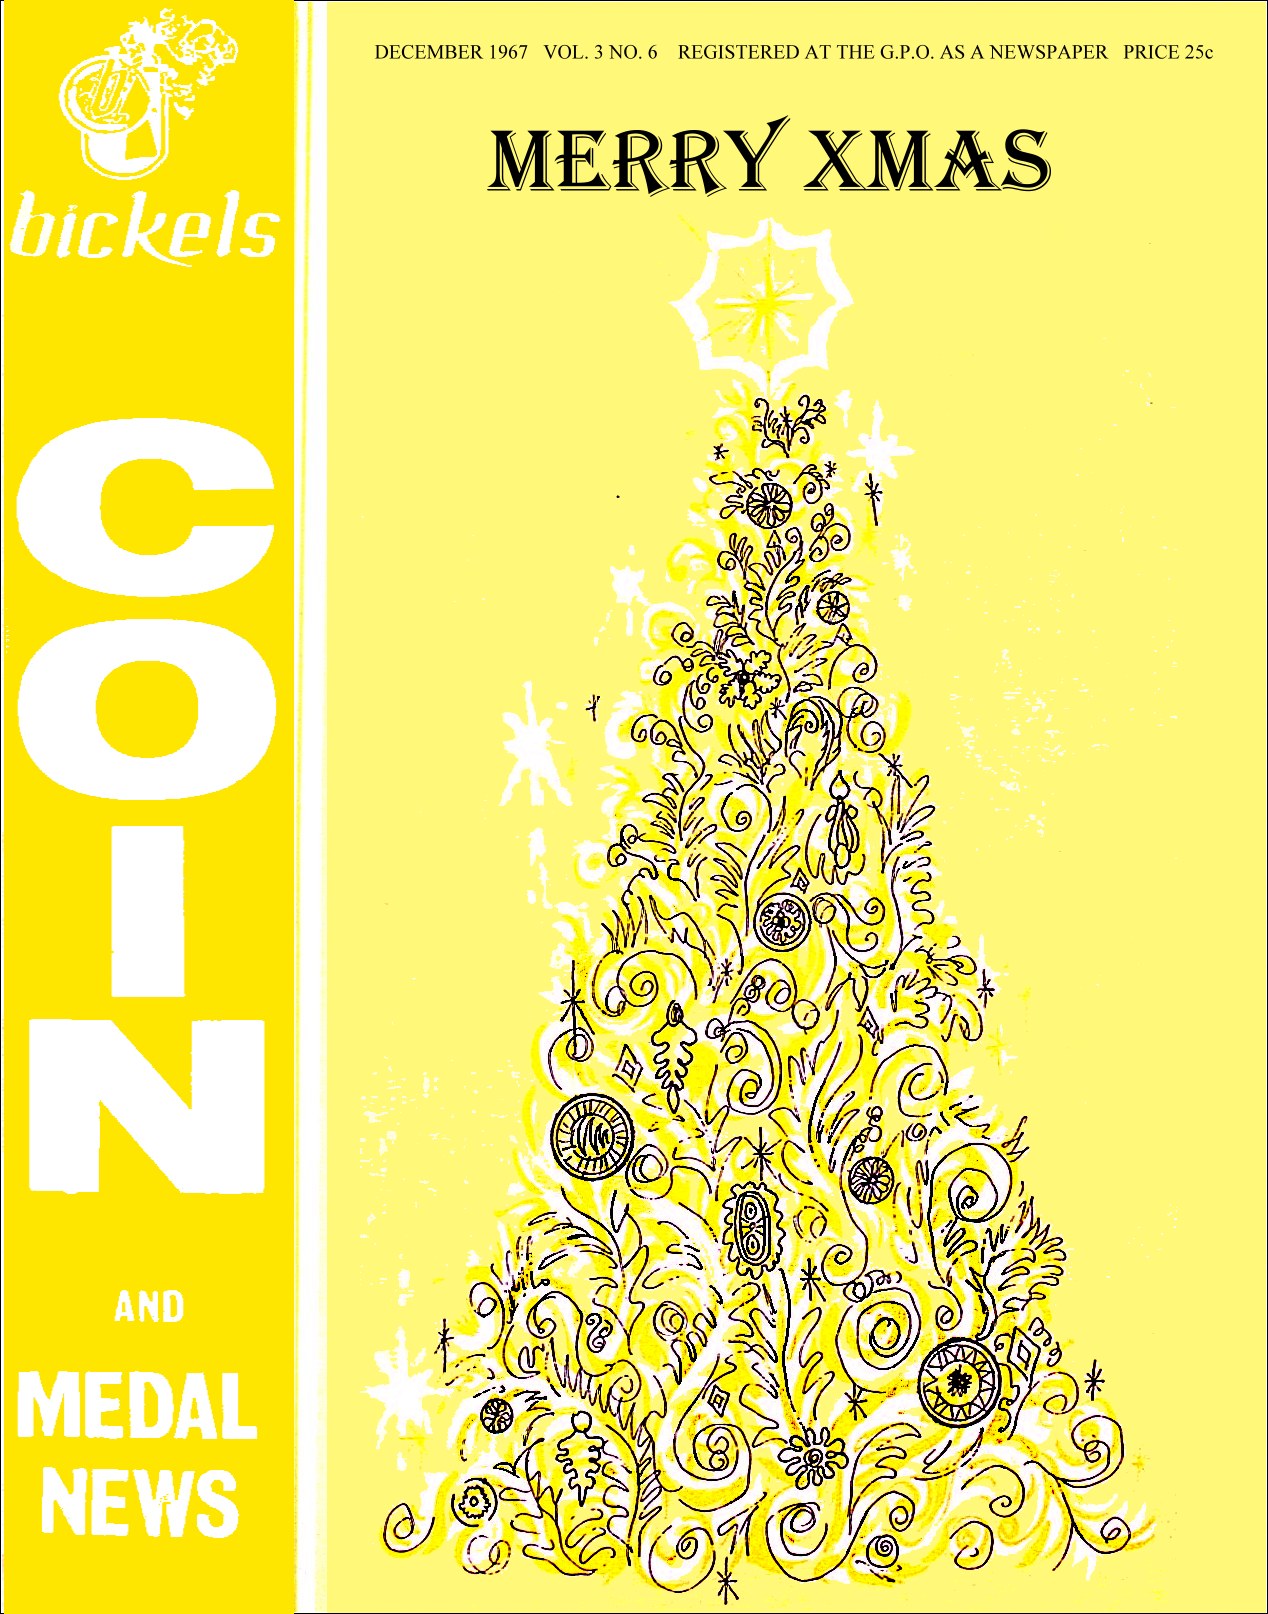 Bickels Coin & Medal News December 1967 Vol 3 No 6